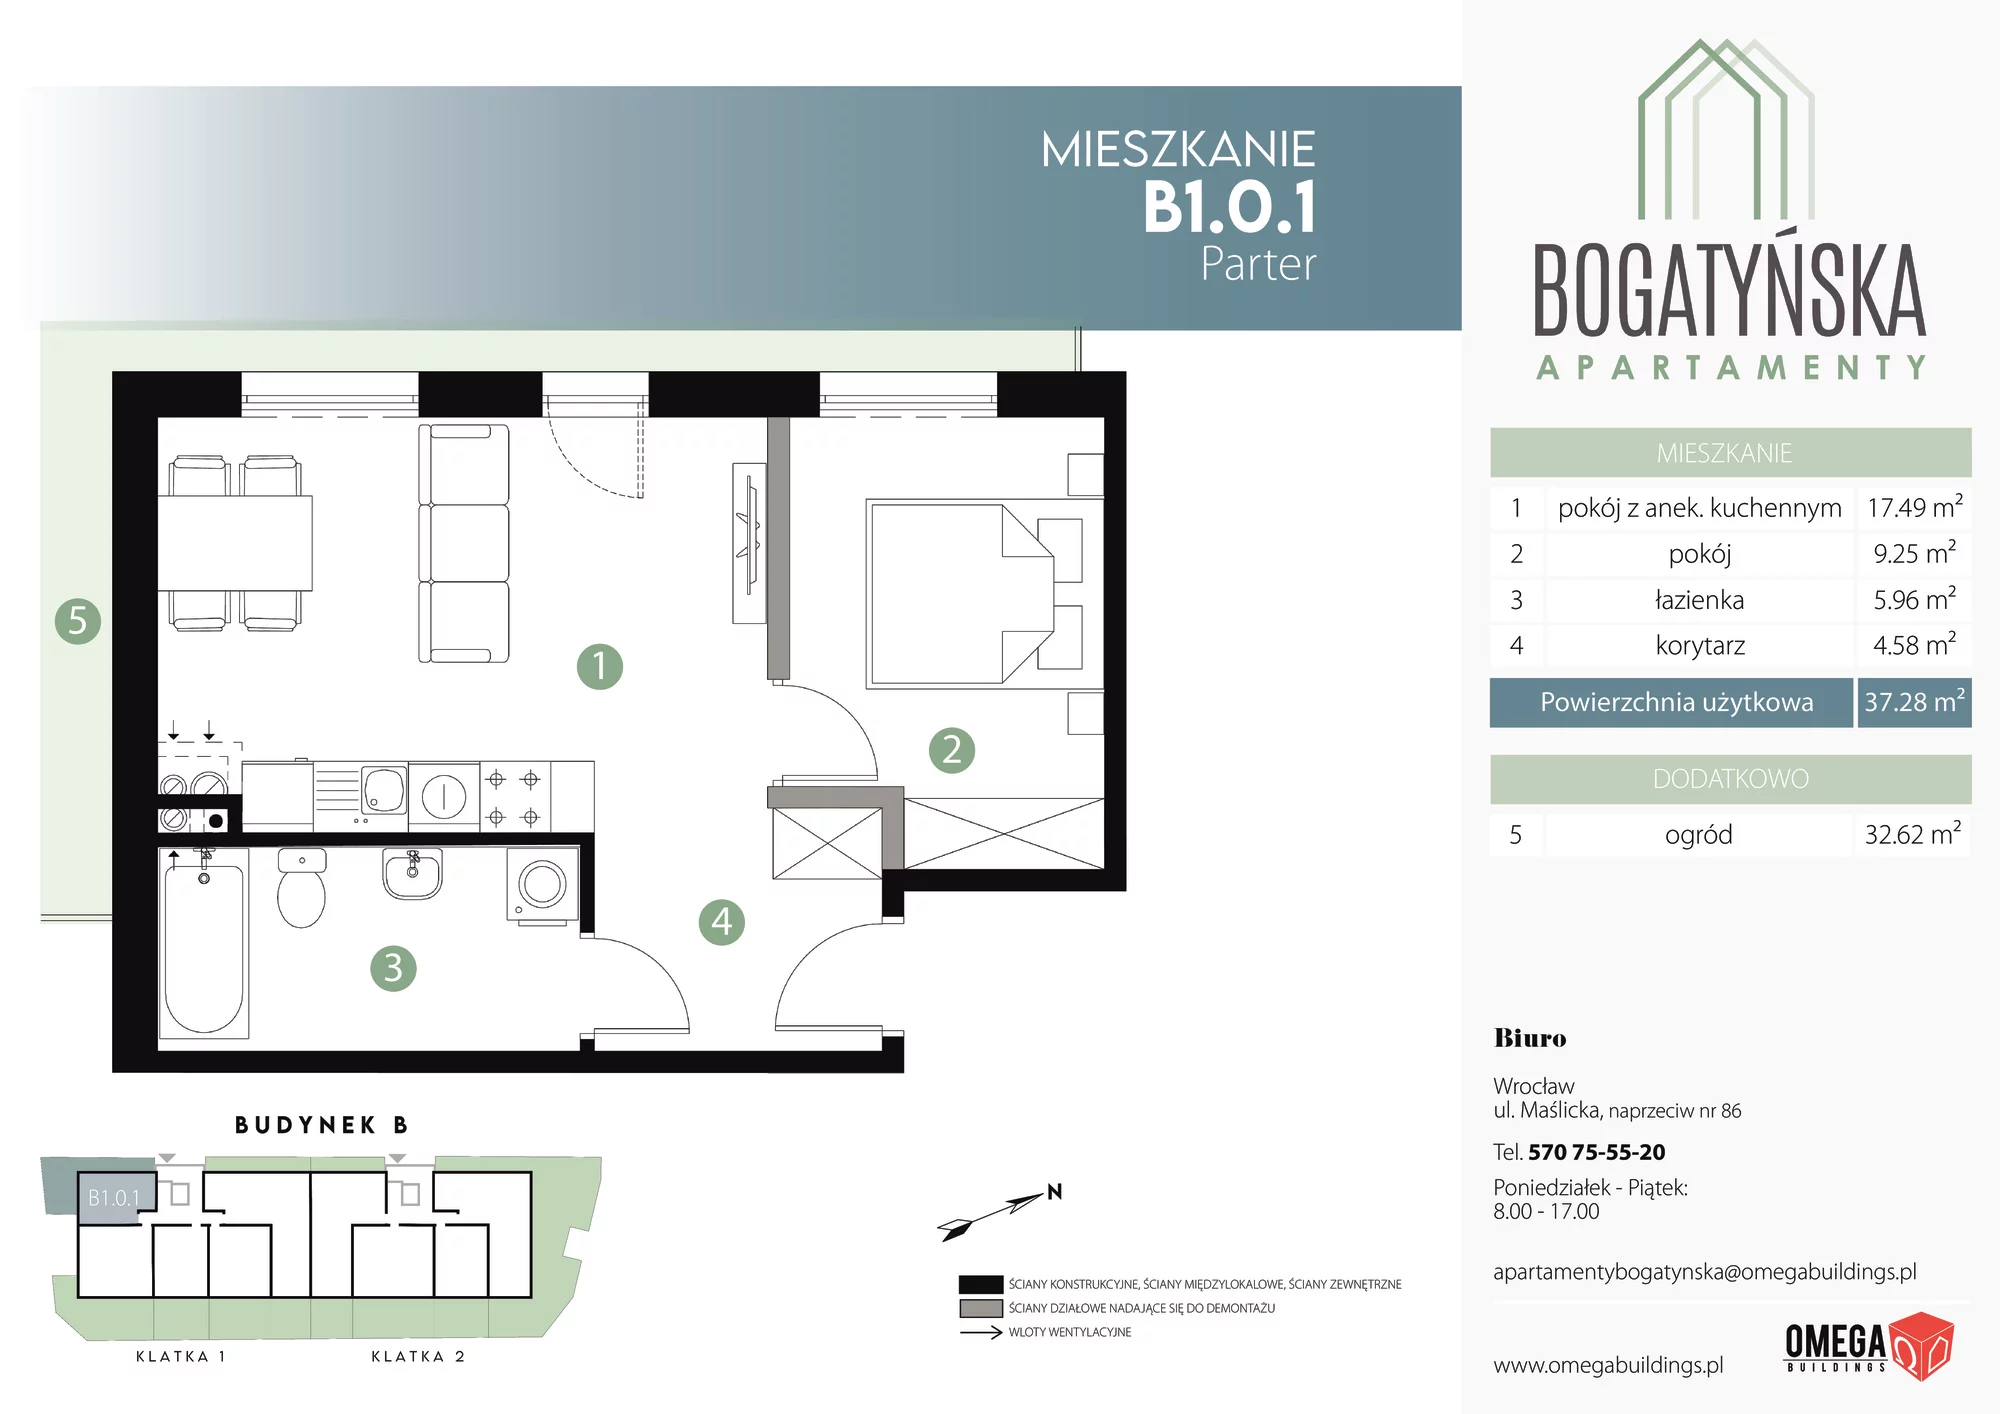 Apartament 37,28 m², parter, oferta nr B1.0.1, Bogatyńska Apartamenty, Wrocław, Maślice, Fabryczna, ul. Bogatyńska